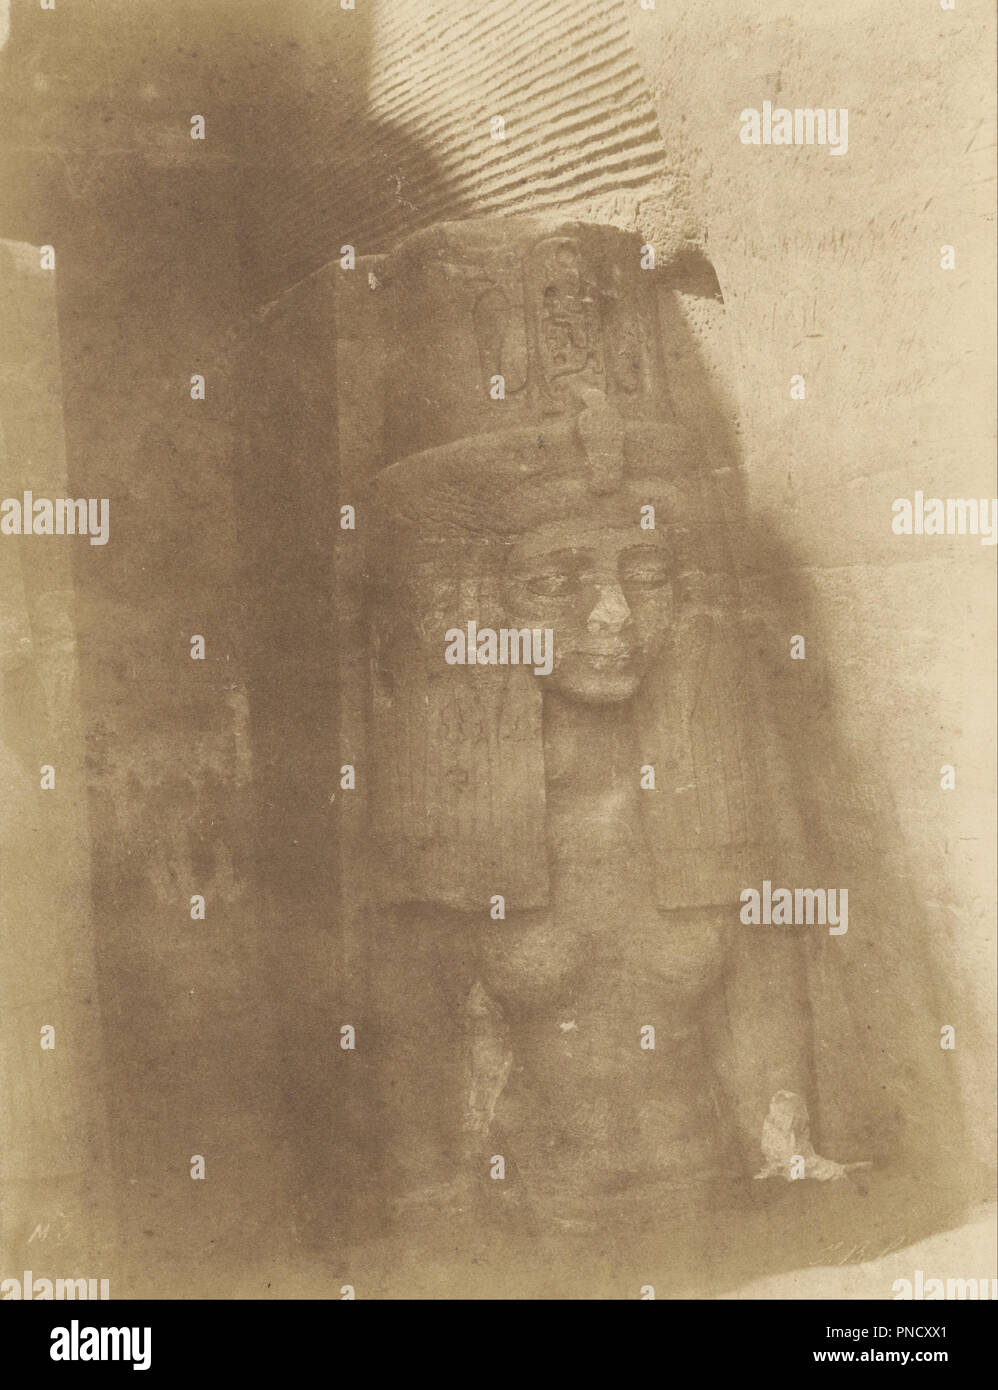 Spéos de Ehre à Istamboul, Statue de Femme. Date/Period: 1854. Print. Salted paper, from a calotype negative. Height: 305 mm (12 in); Width: 233 mm (9.17 in). Author: John Beasly Greene. Stock Photo